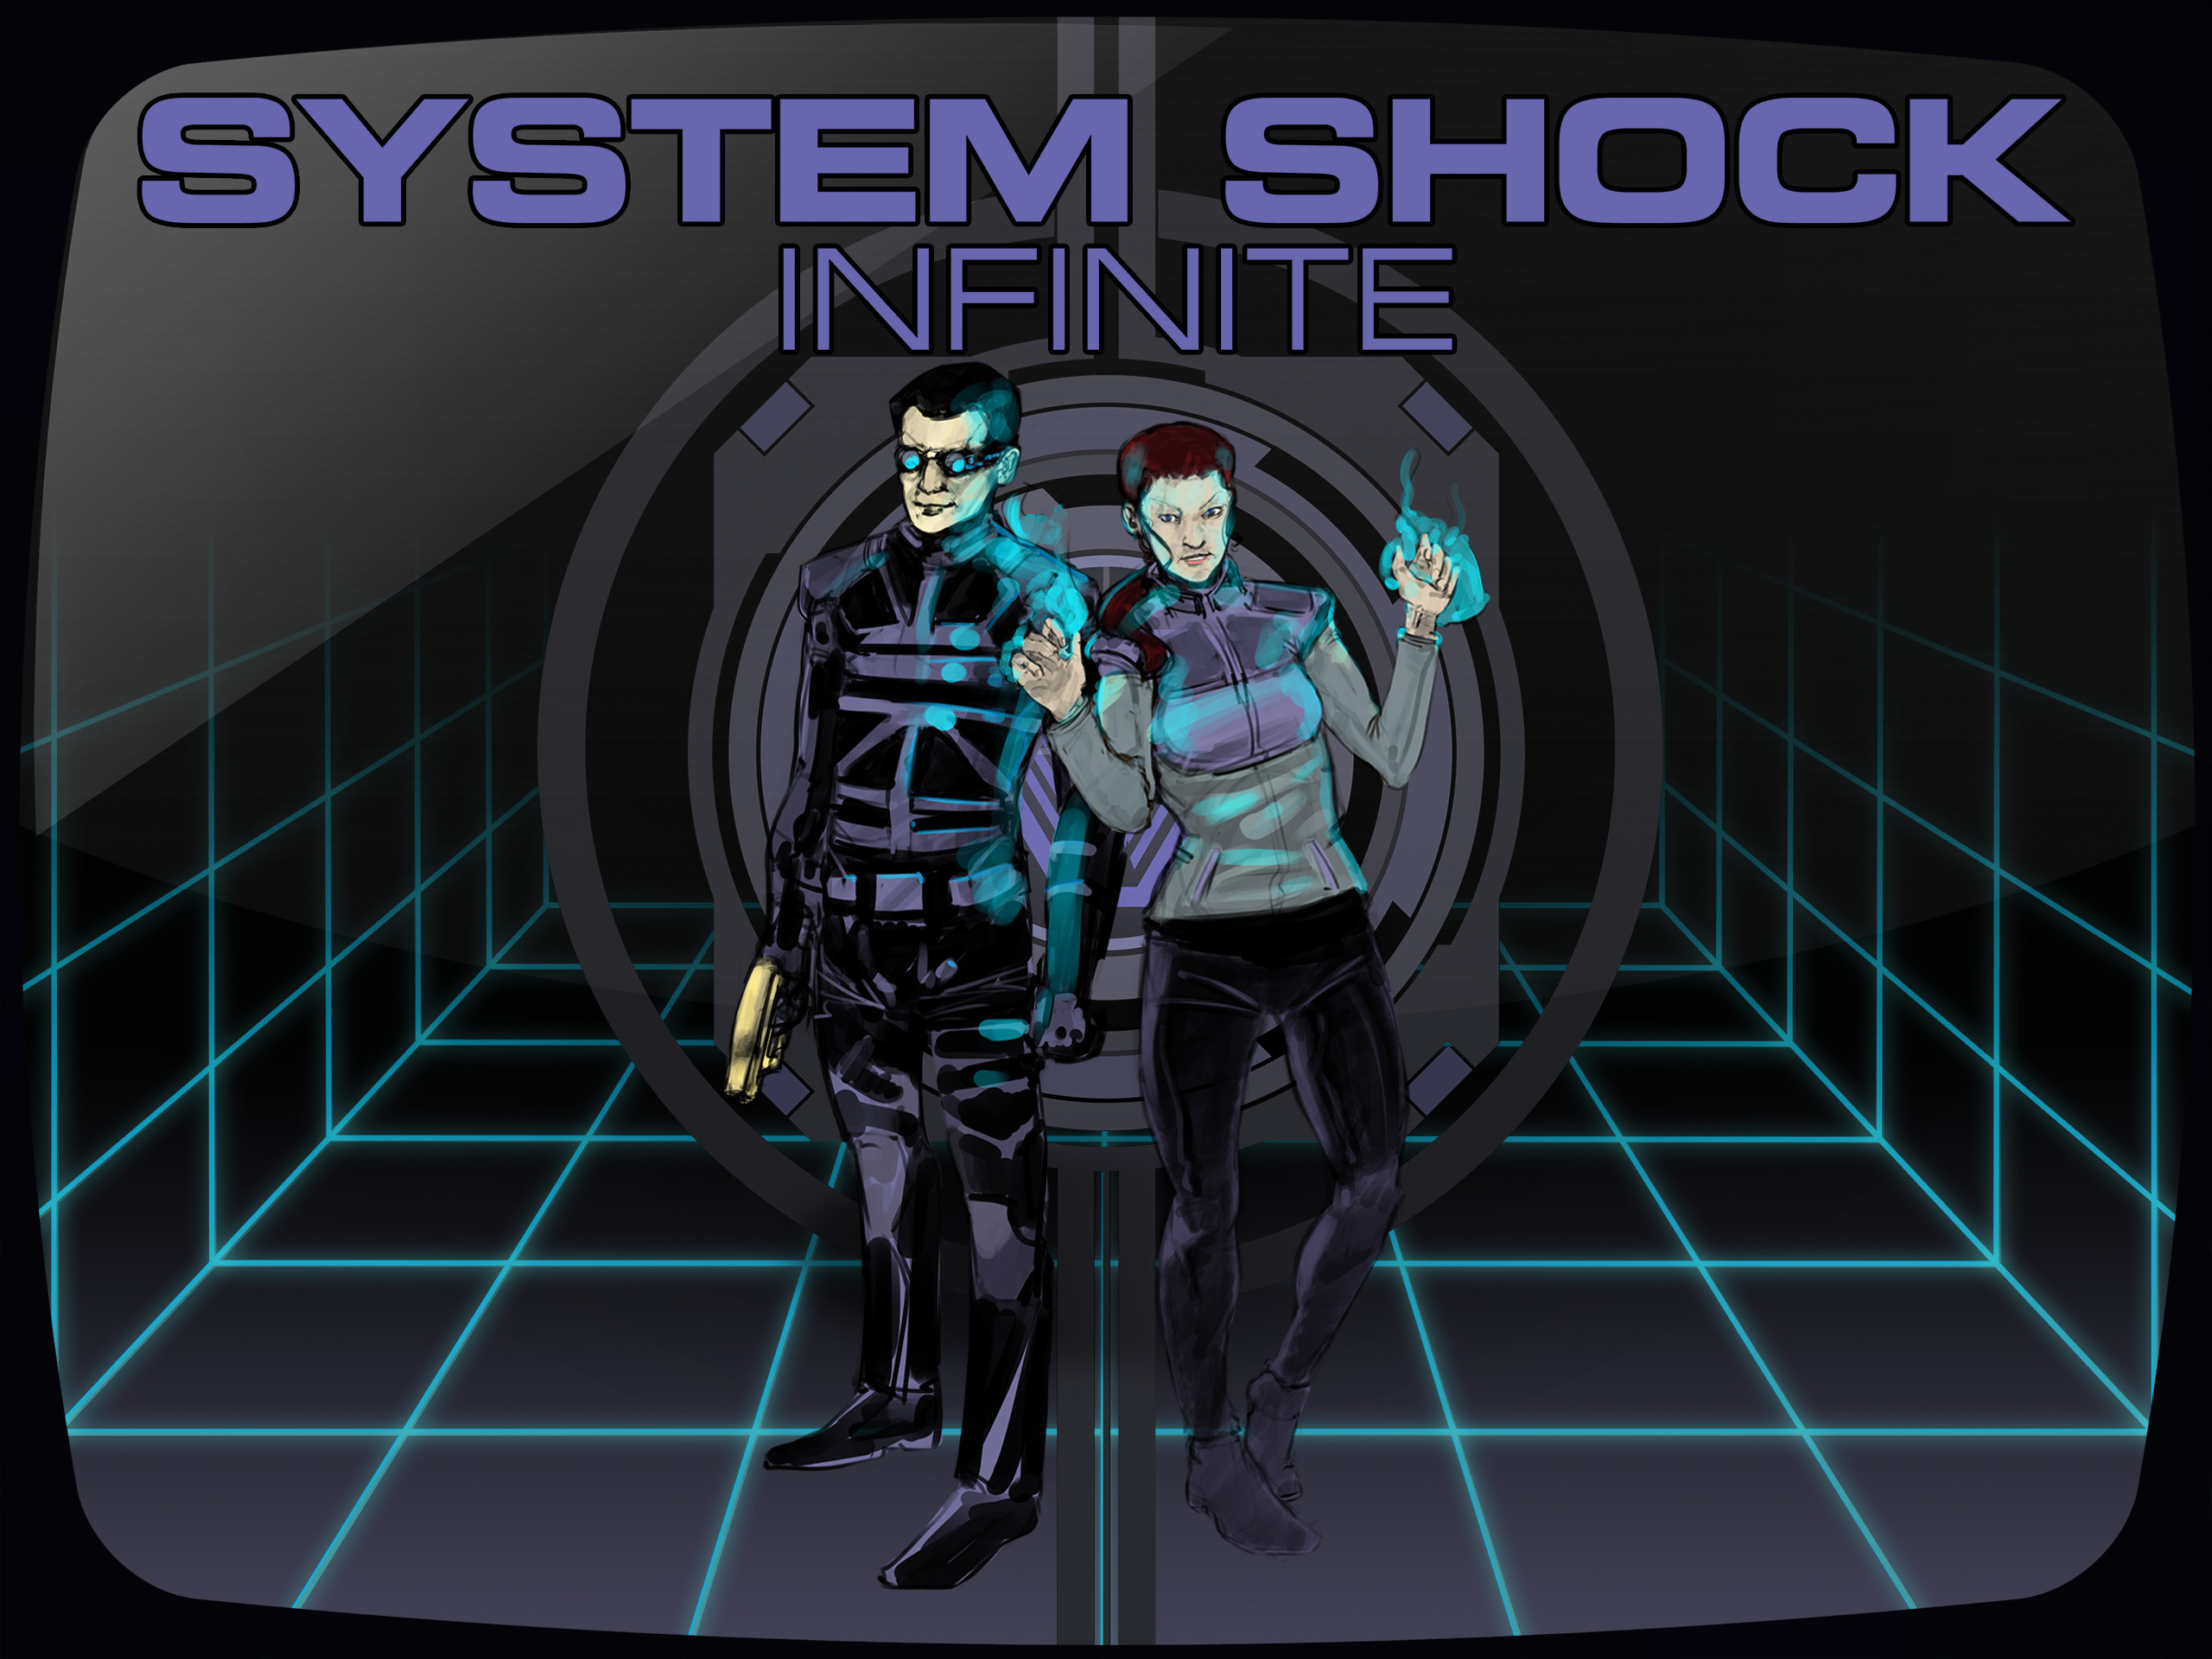 System Shock Infinite v2.41 full version file - Mod DB